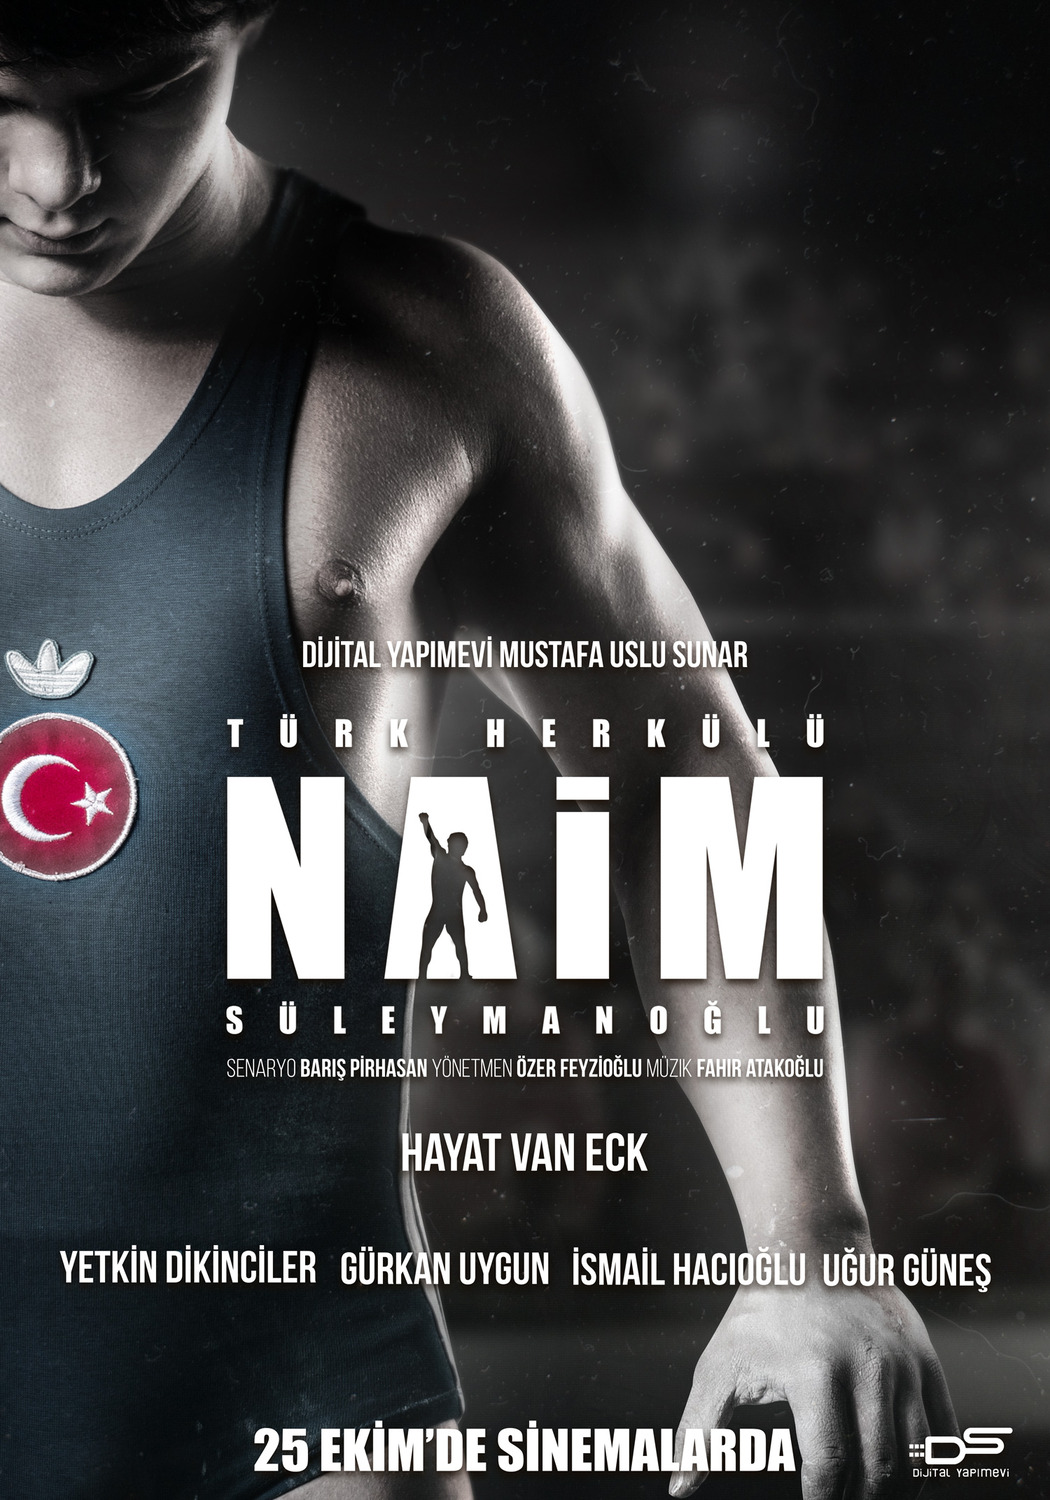 Extra Large Movie Poster Image for Cep Herkülü: Naim Süleymanoglu (#2 of 2)